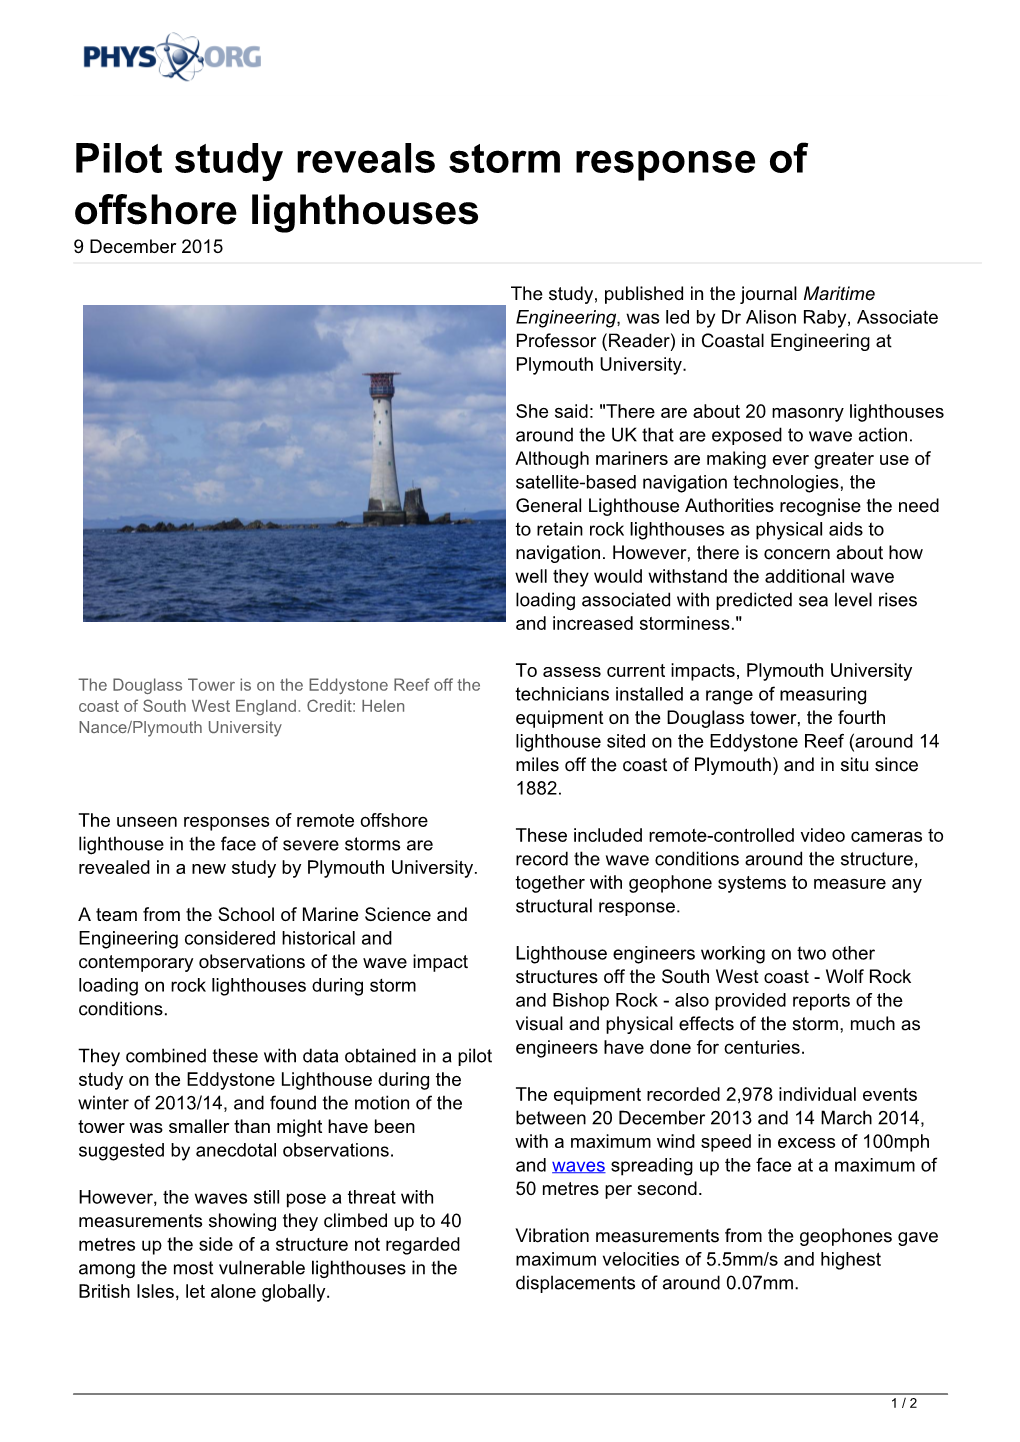 Pilot Study Reveals Storm Response of Offshore Lighthouses 9 December 2015